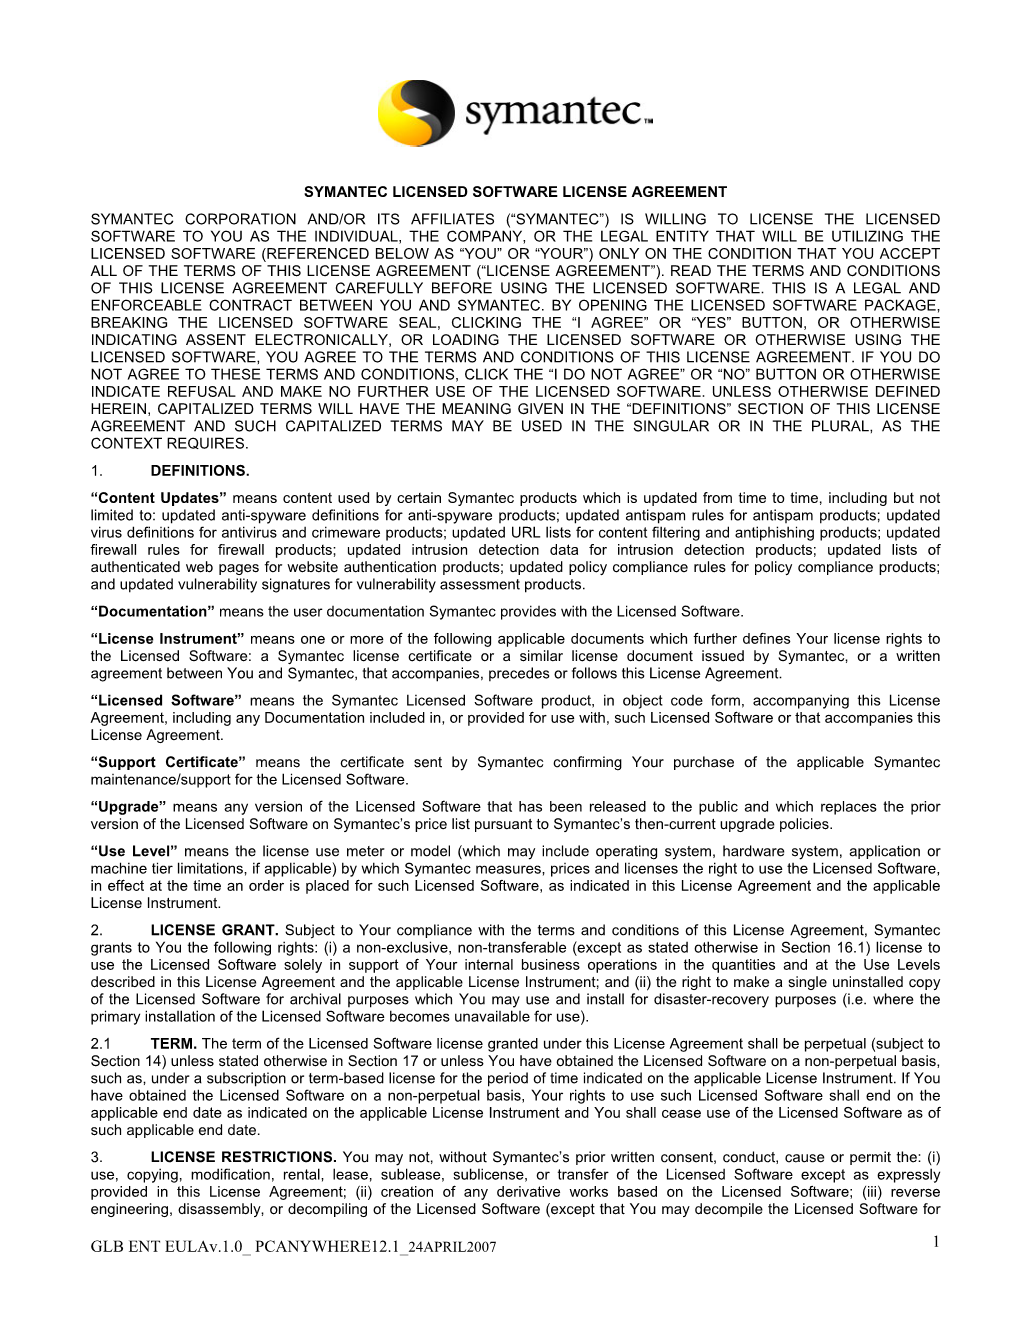 Pcanywhere 12.1 Consumer License Agreement